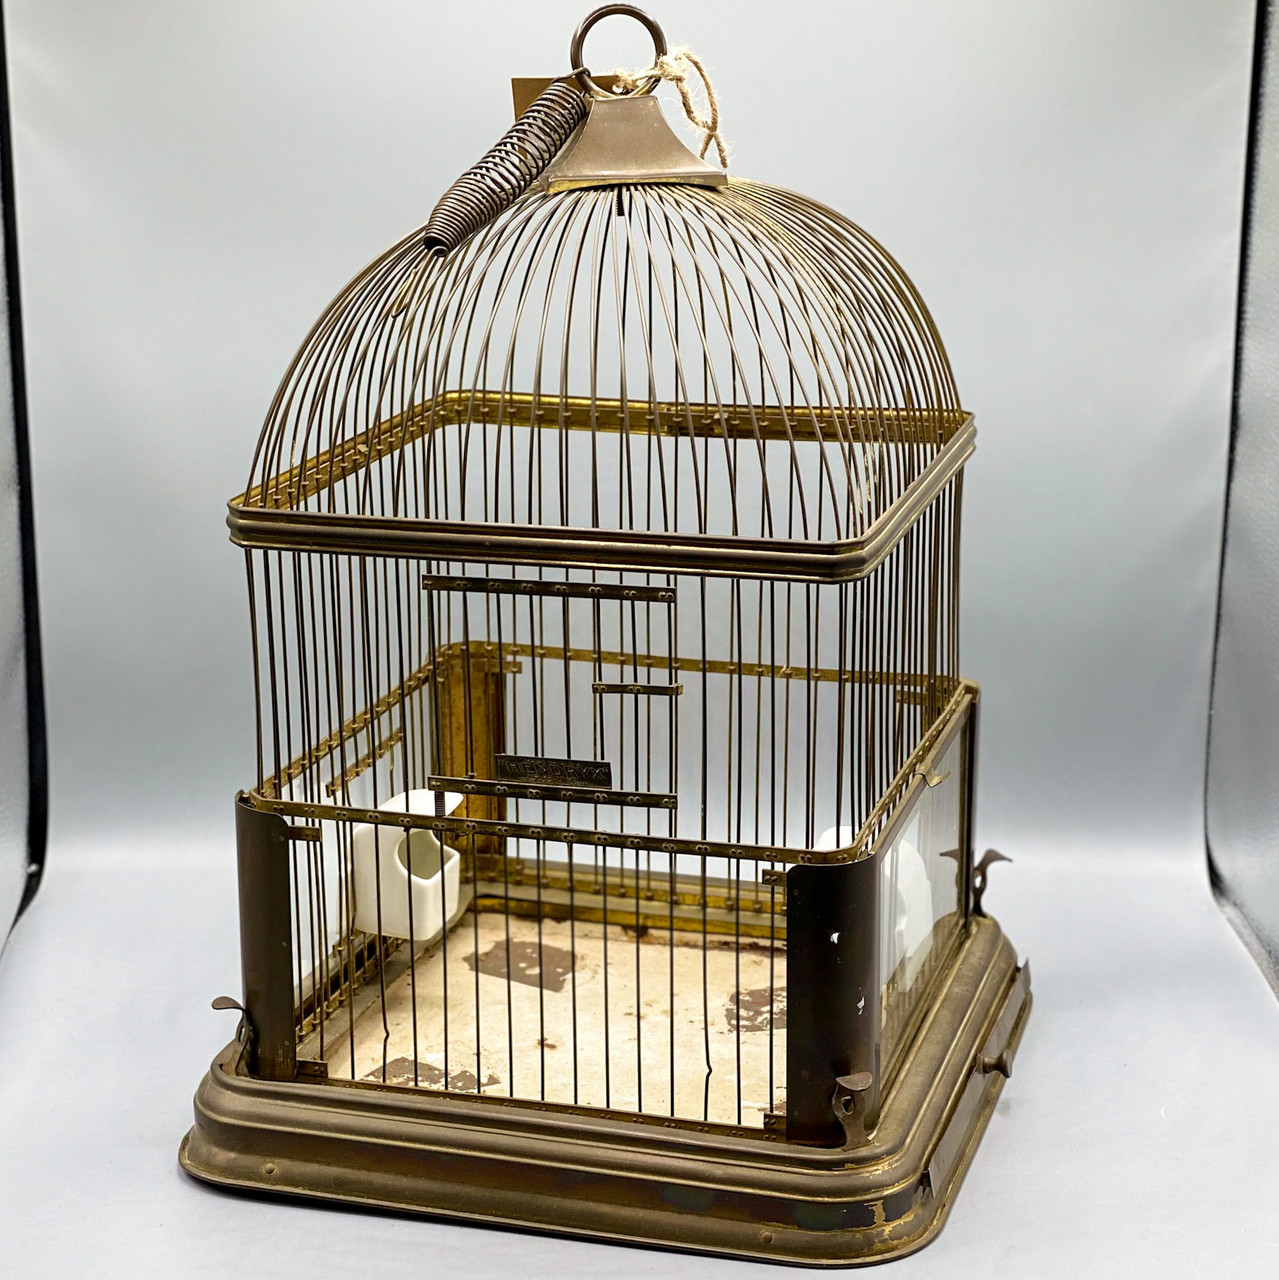 An original Hendryx birdcage via Hendryx Hoarder blog